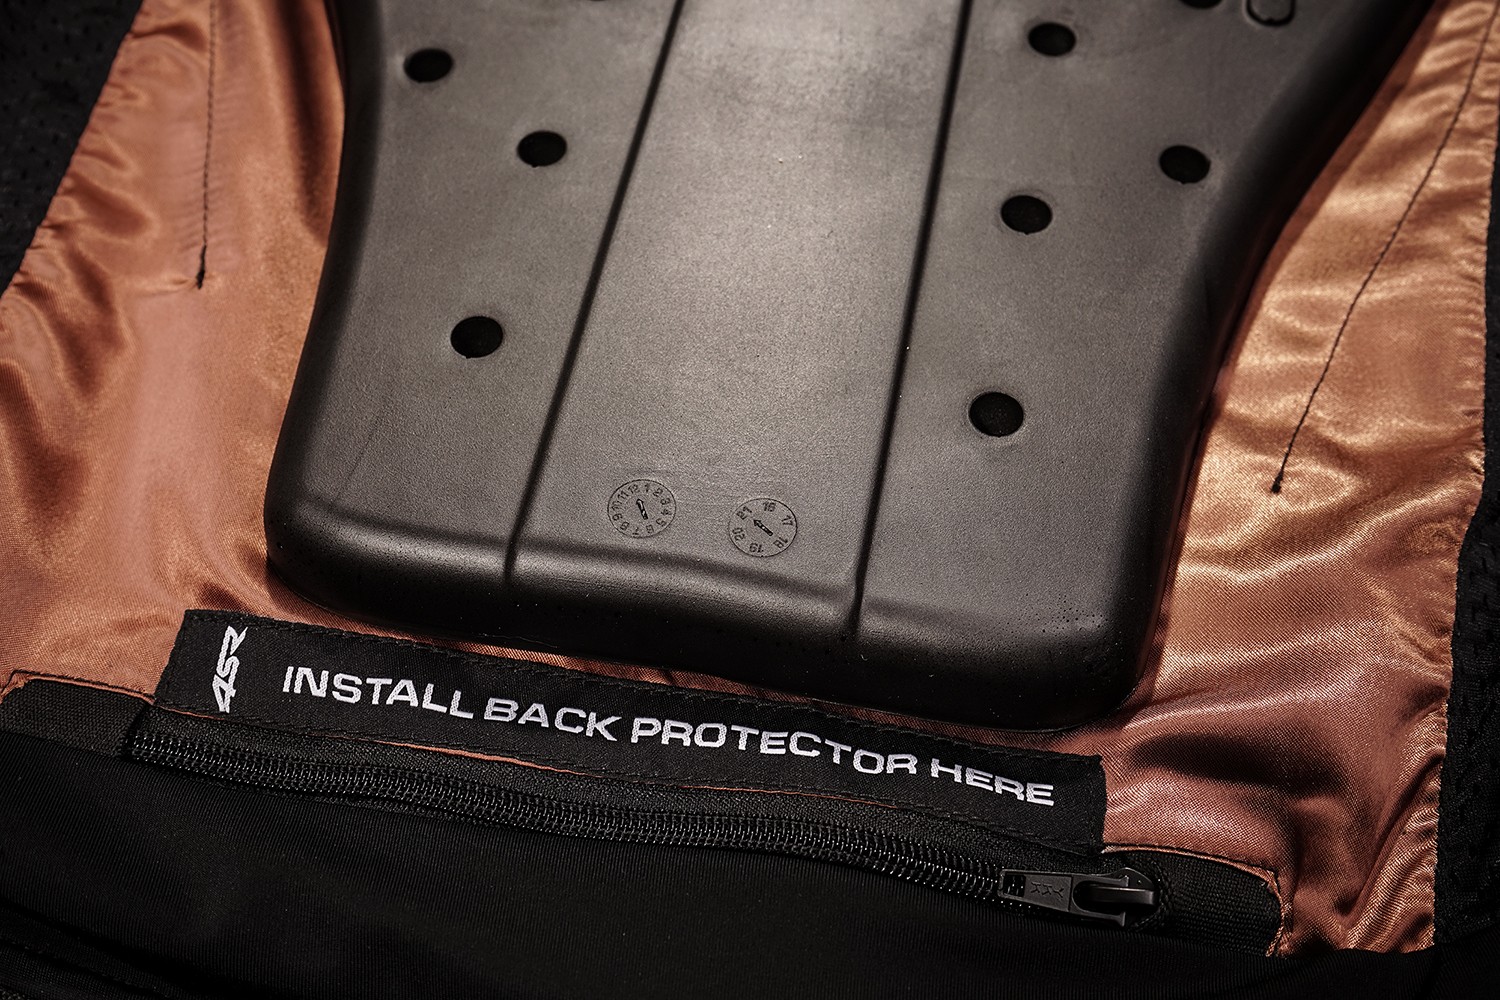 4SR Insert back protector